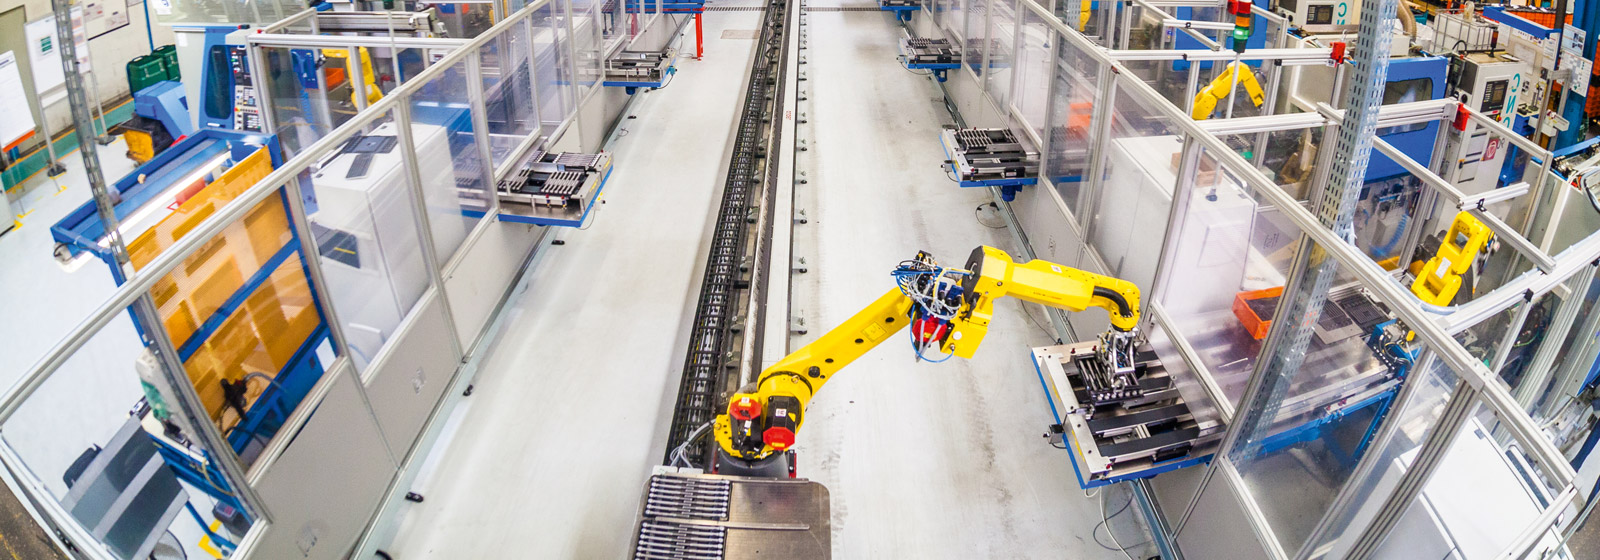 Robot on rail handling materials